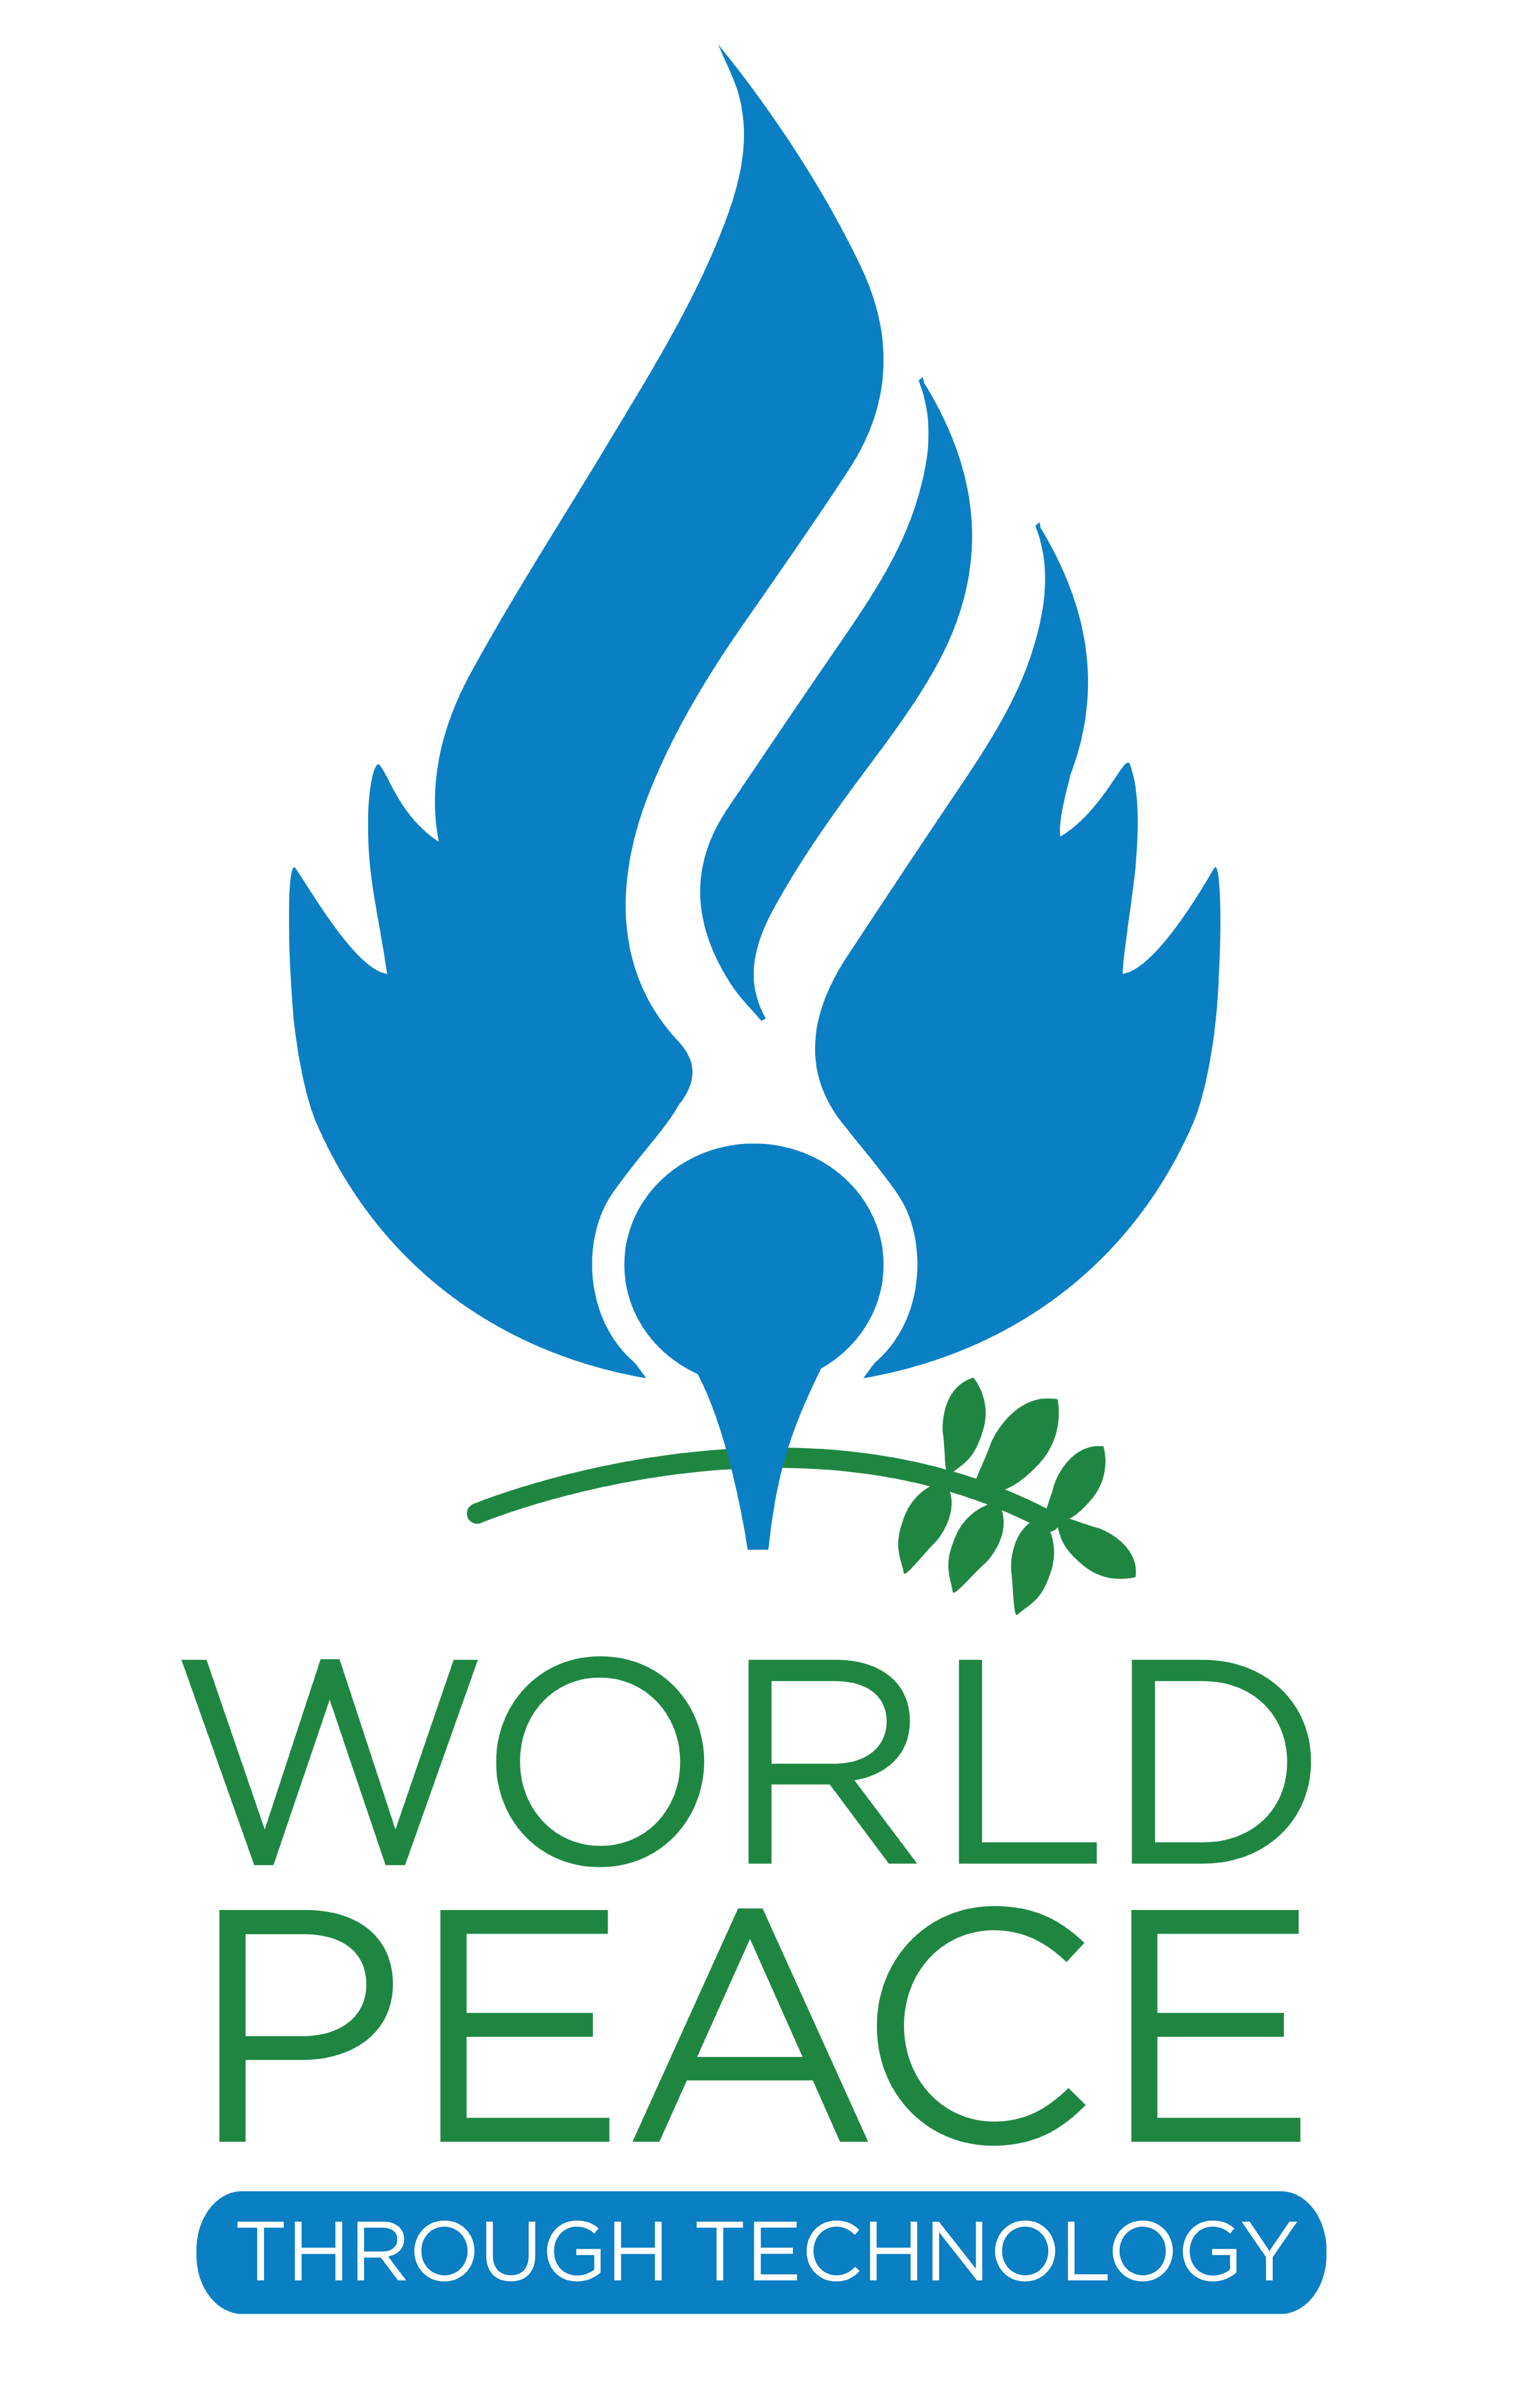 world peace logo